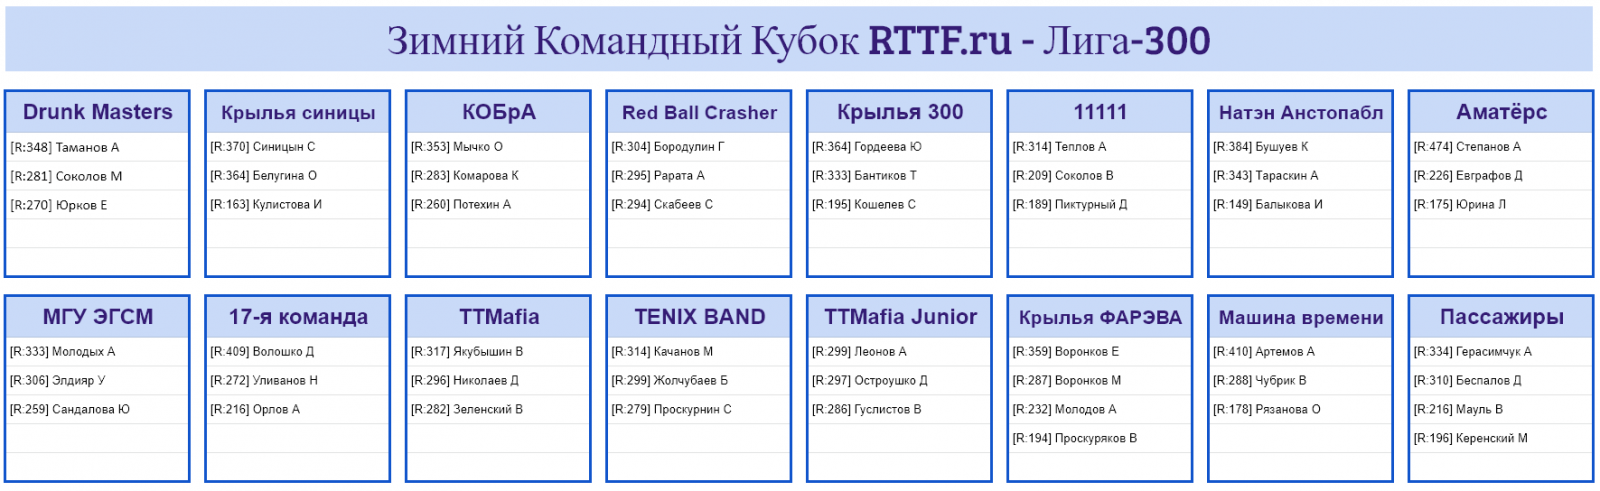 результаты турнира Зимний командный кубок RTTF | Лига-300